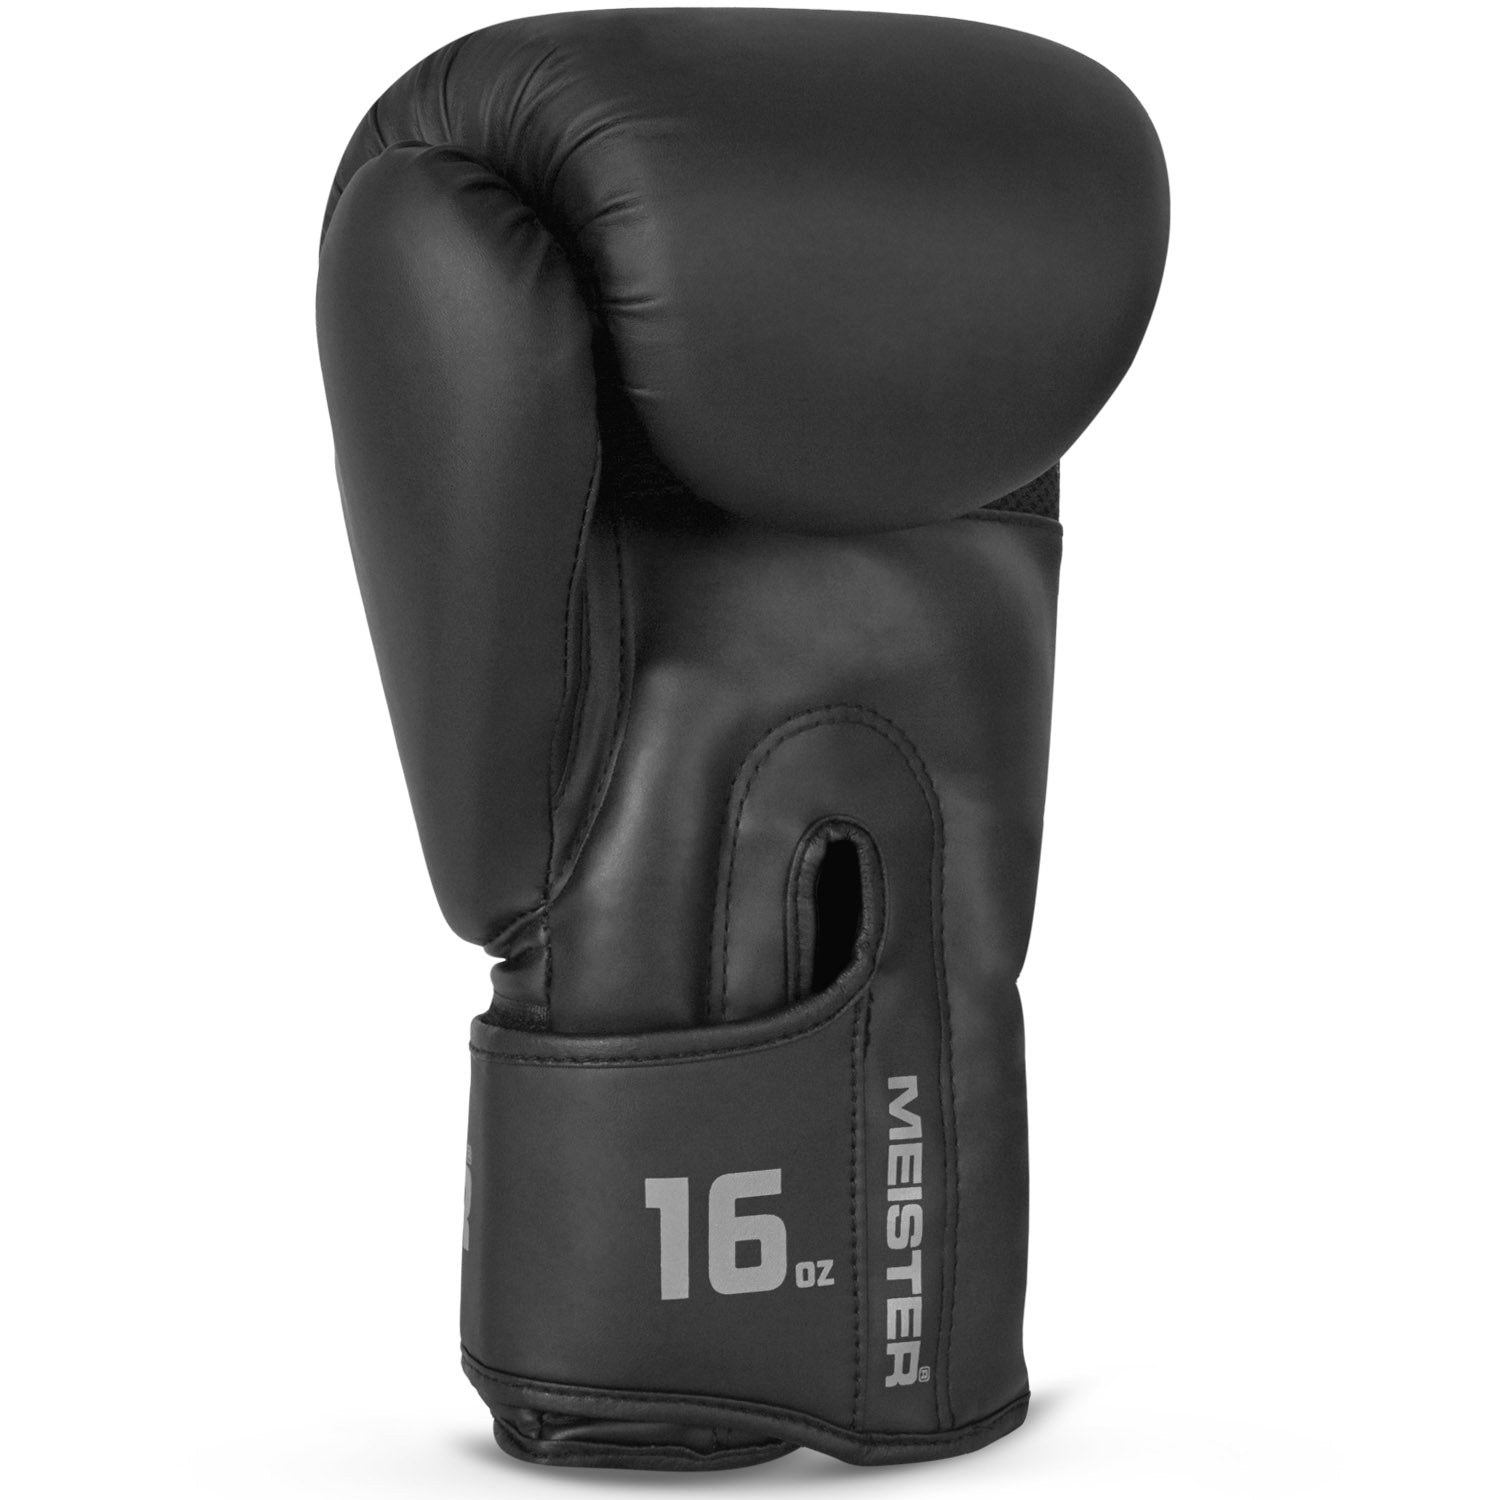 Meister 16oz [CRITICAL] Boxing Gloves - Matte Black